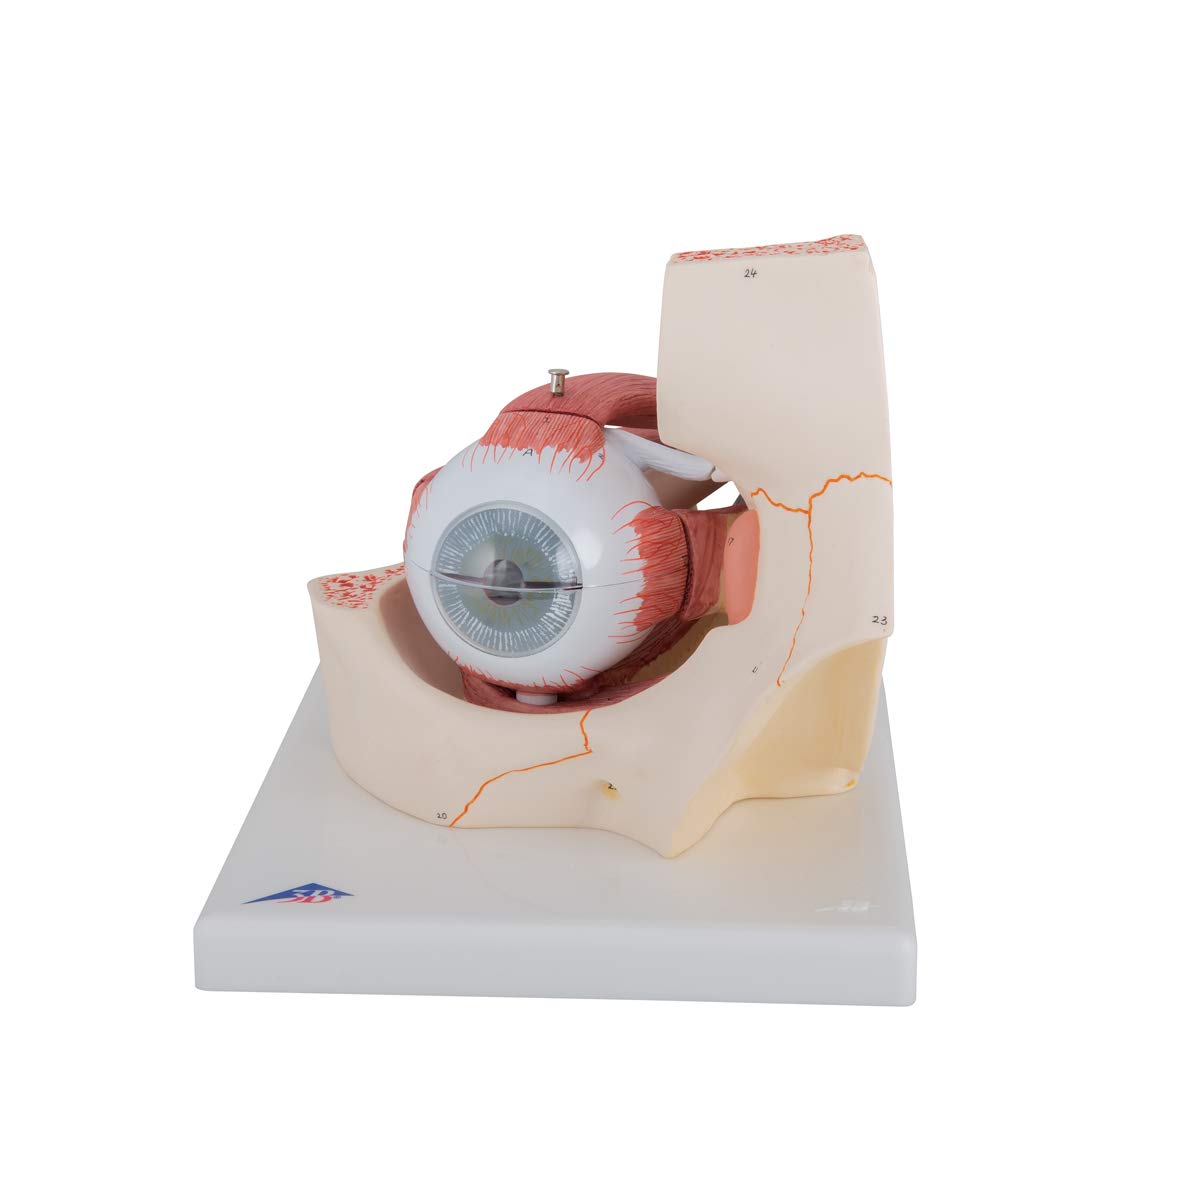 F13-3 Oko: Model oka, 3x zvětšeno, 7 dílů